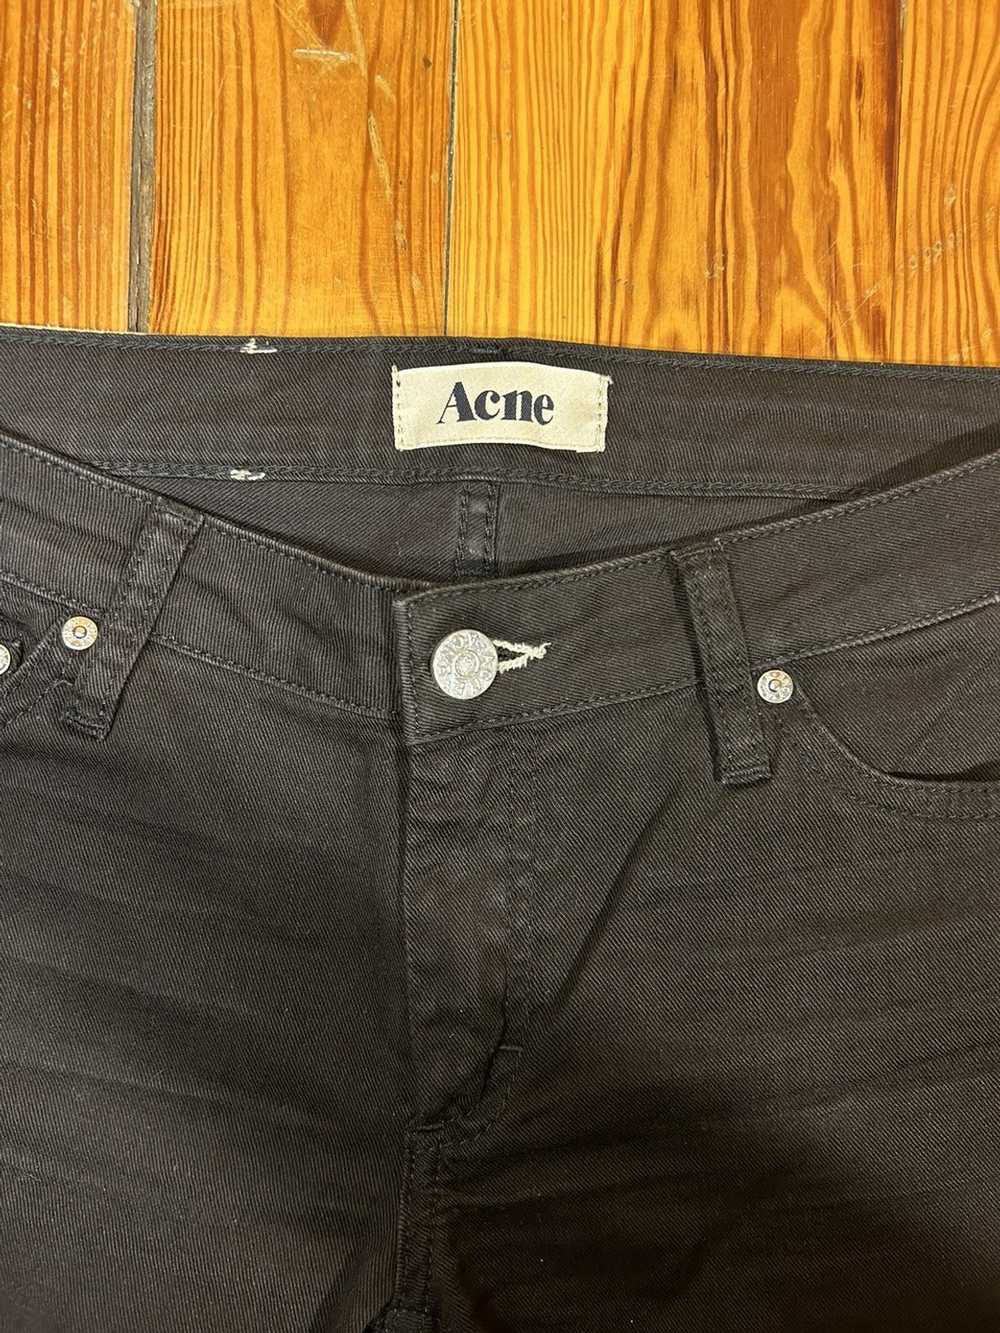 Acne Studios Acne Studios black jeans - image 4